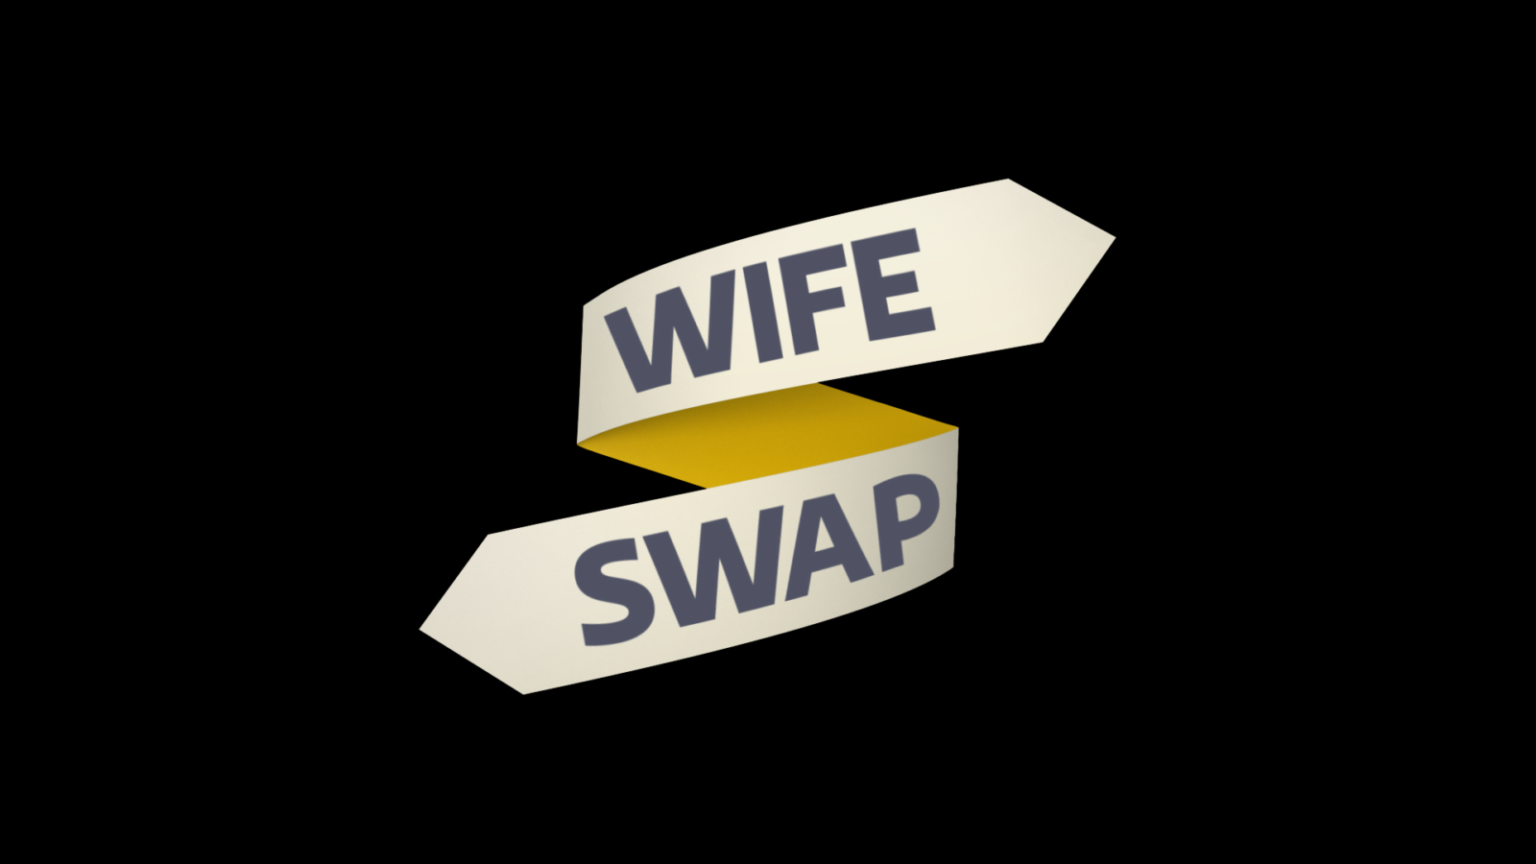 How to Watch Wife Swap Online